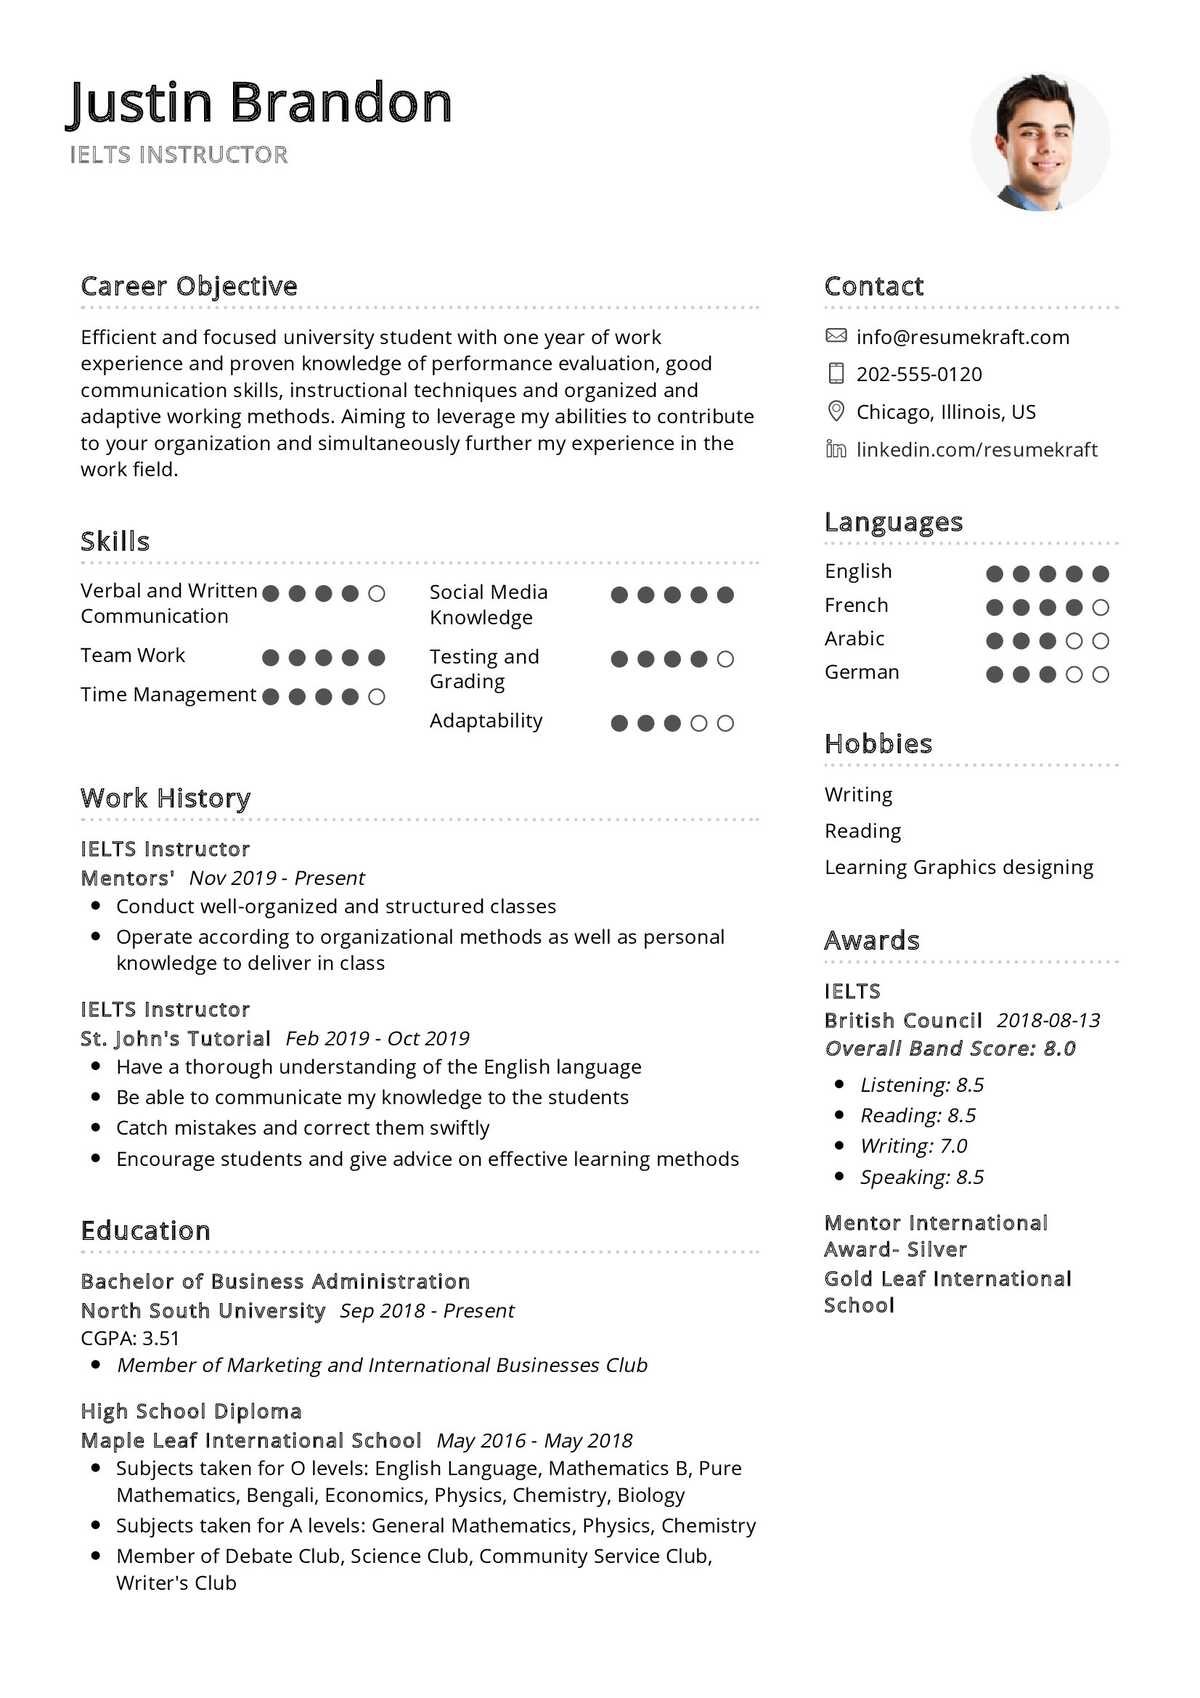 IELTS Instructor Resume